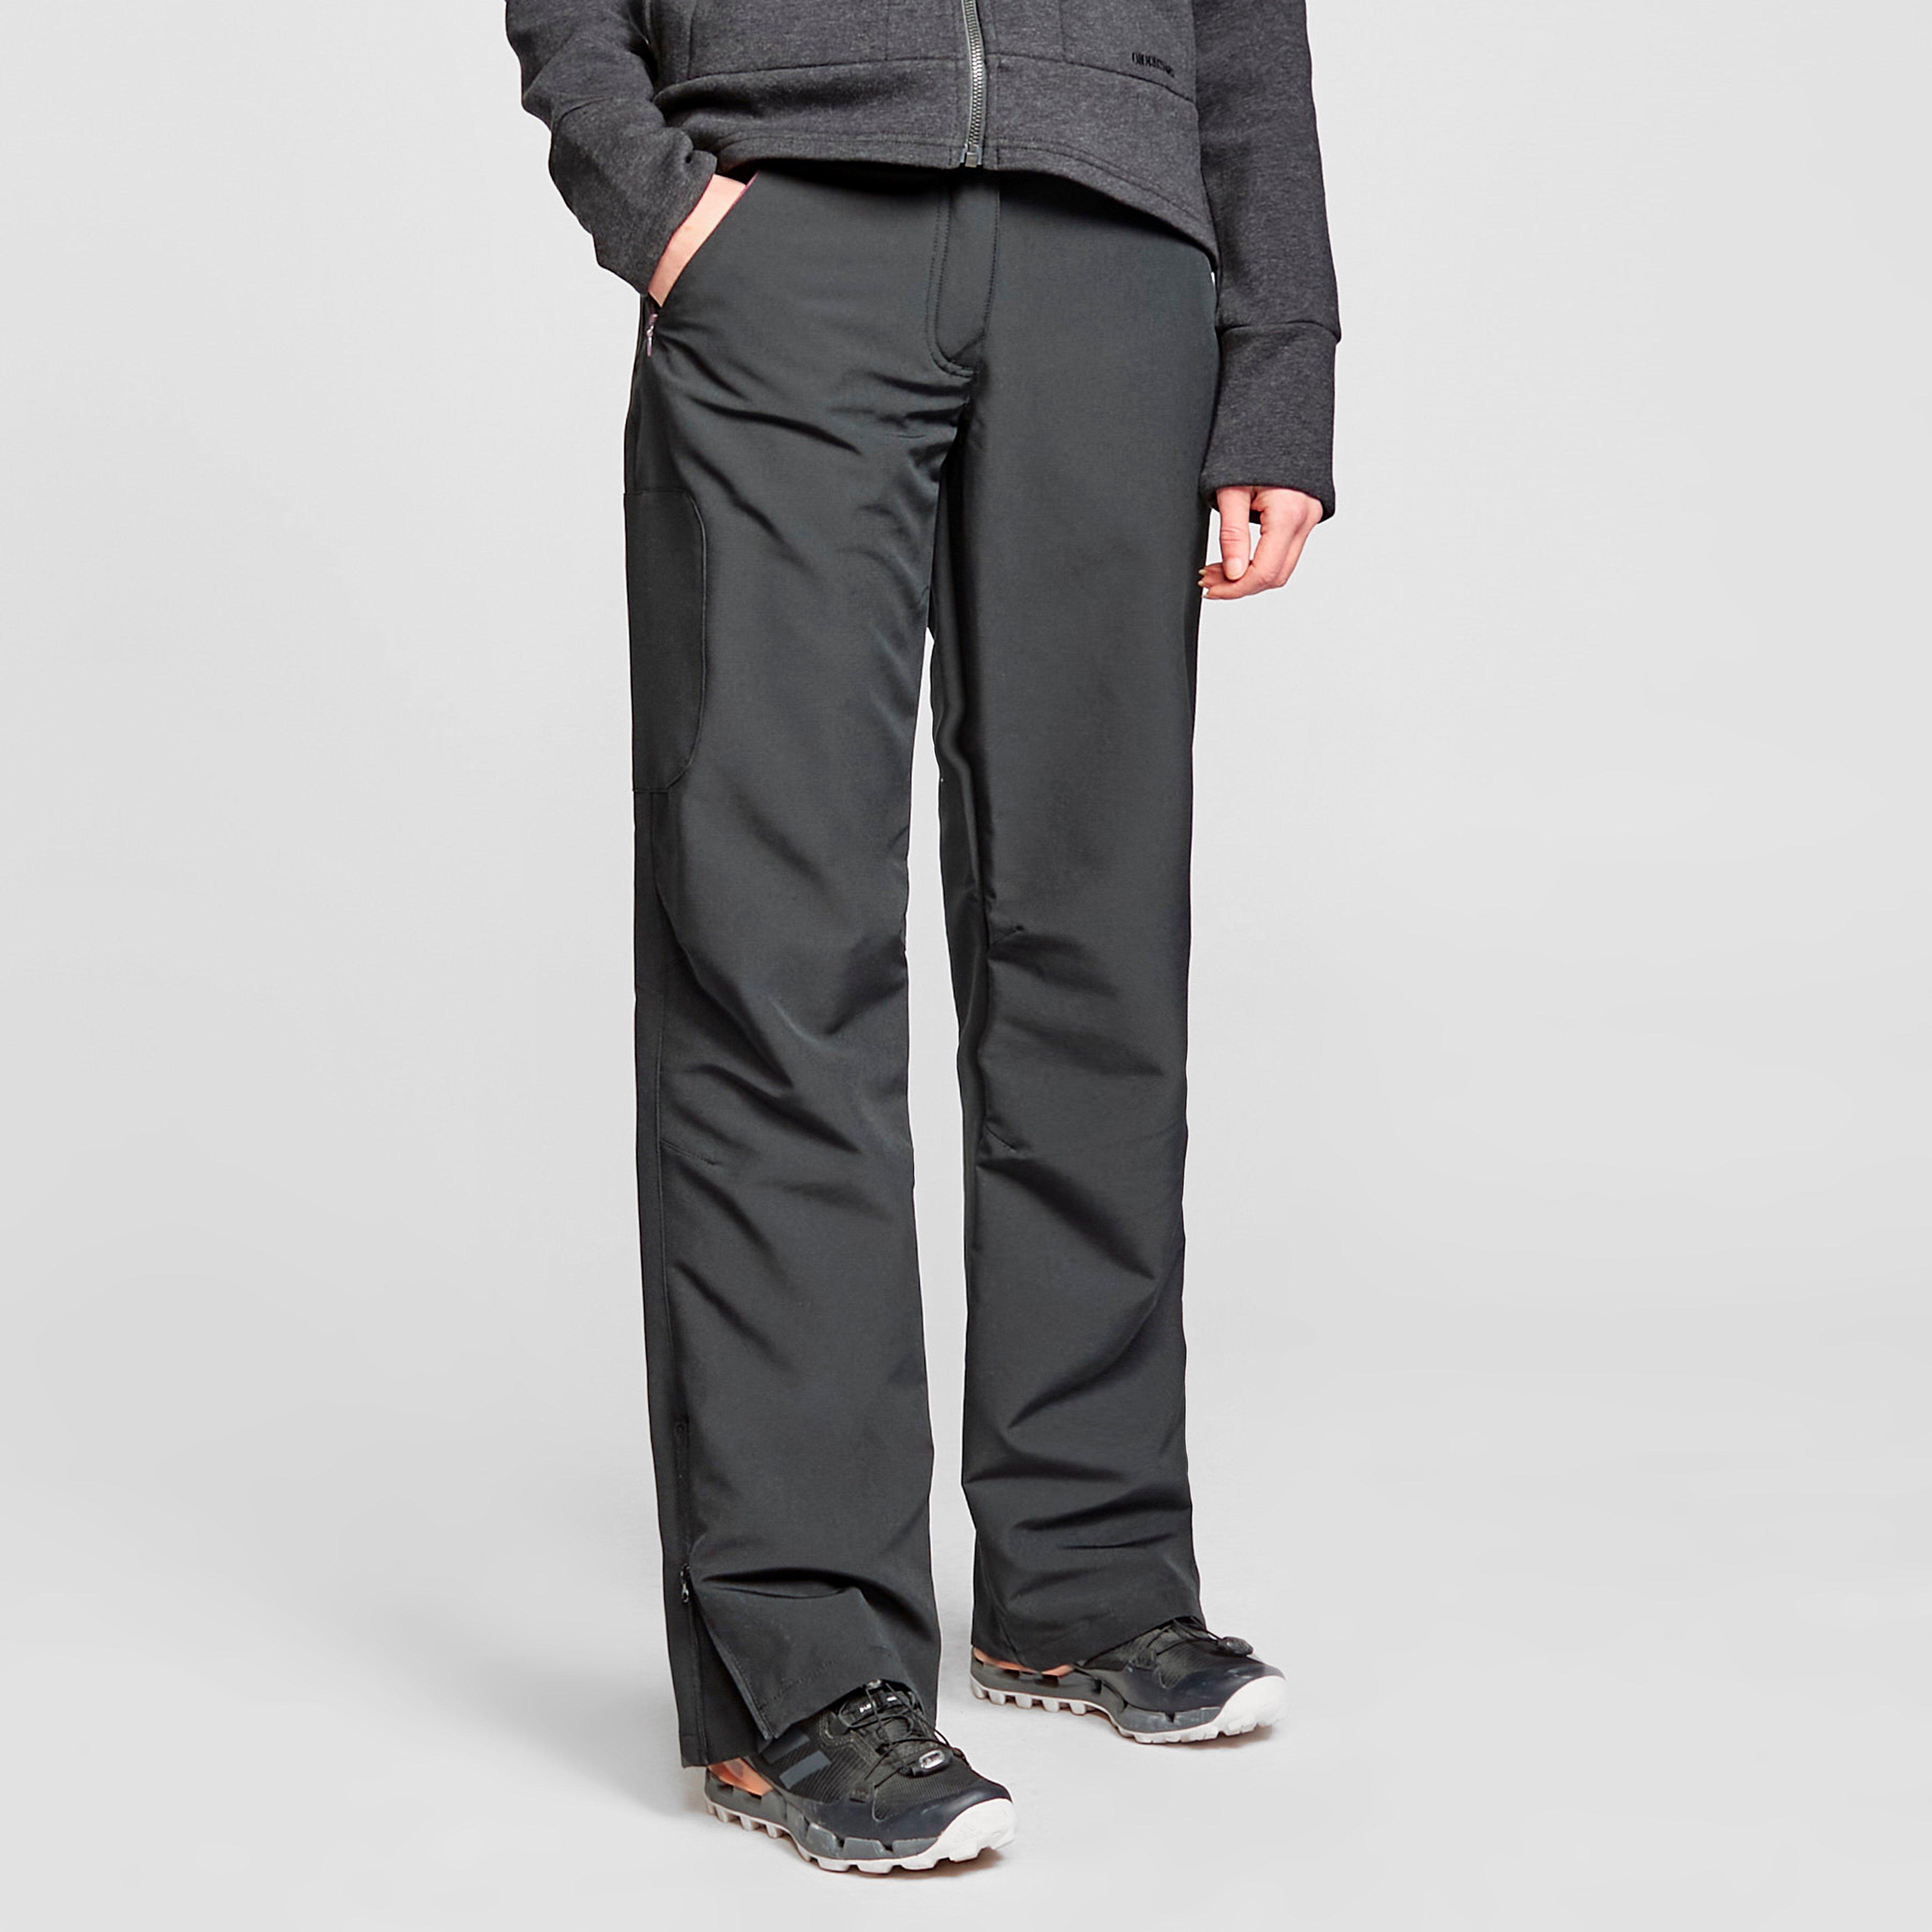 Peter Storm Womens Rapid Softshell Trousers - Black/blk  Black/blk